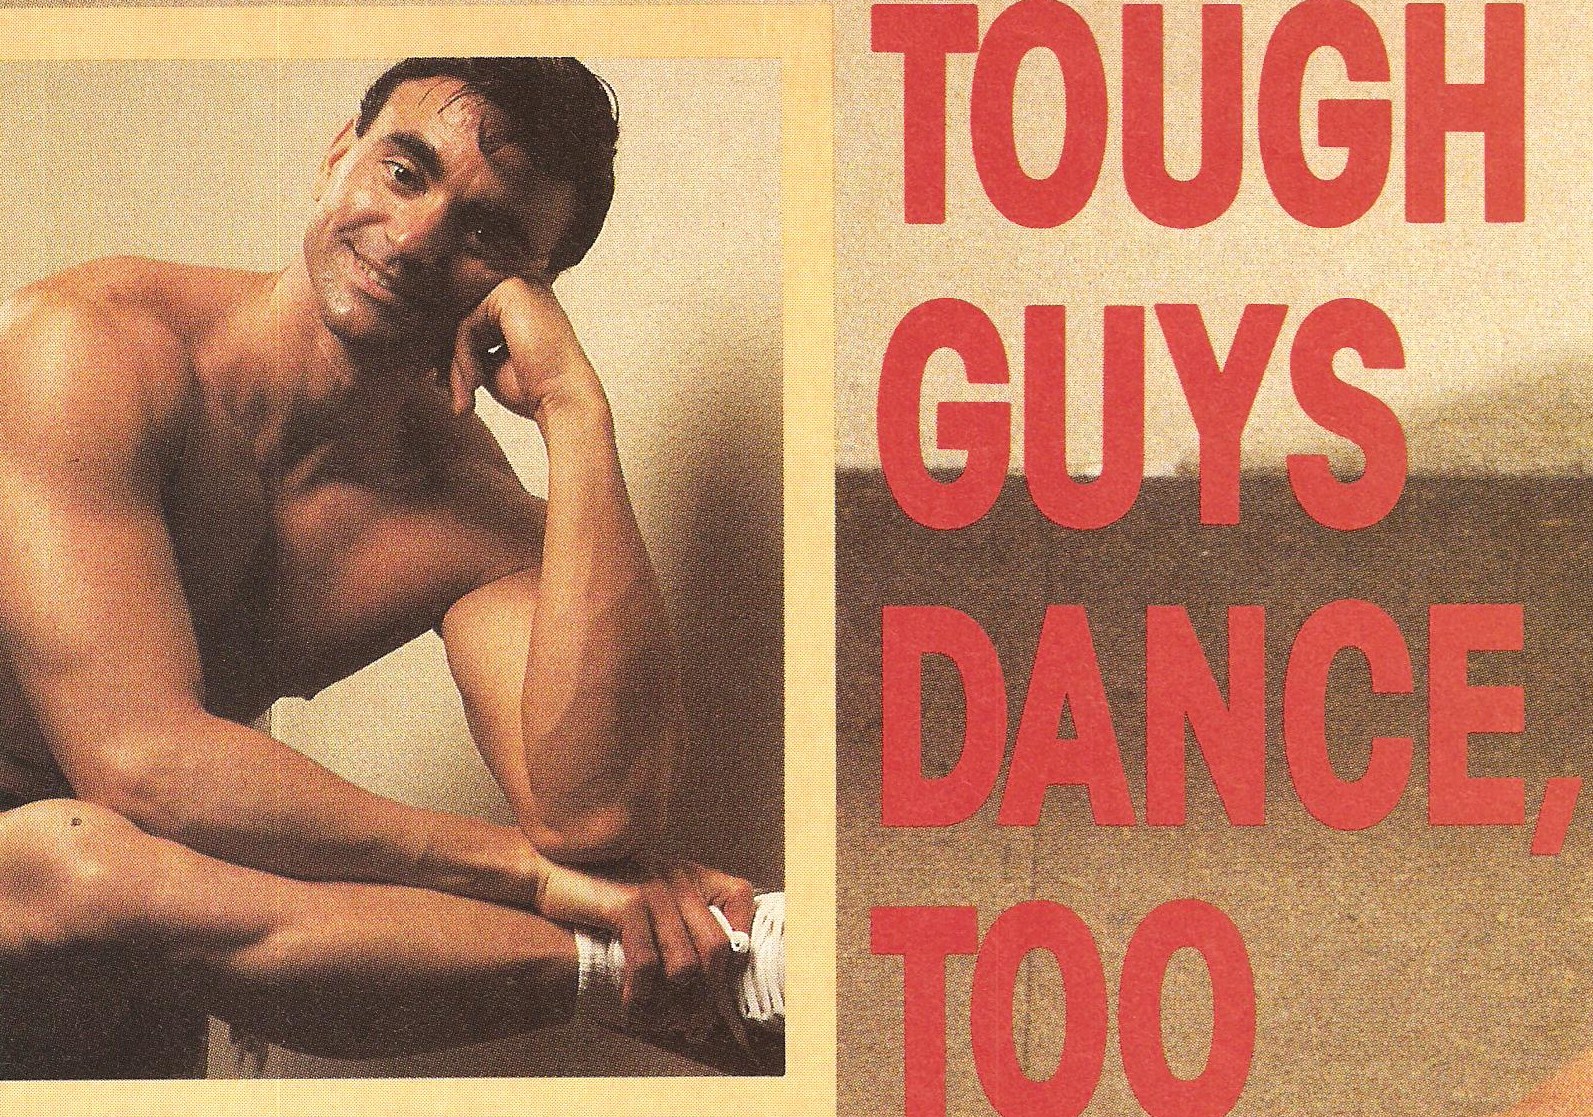 Lawrence Leritz featured in Men's Fitness Magazine